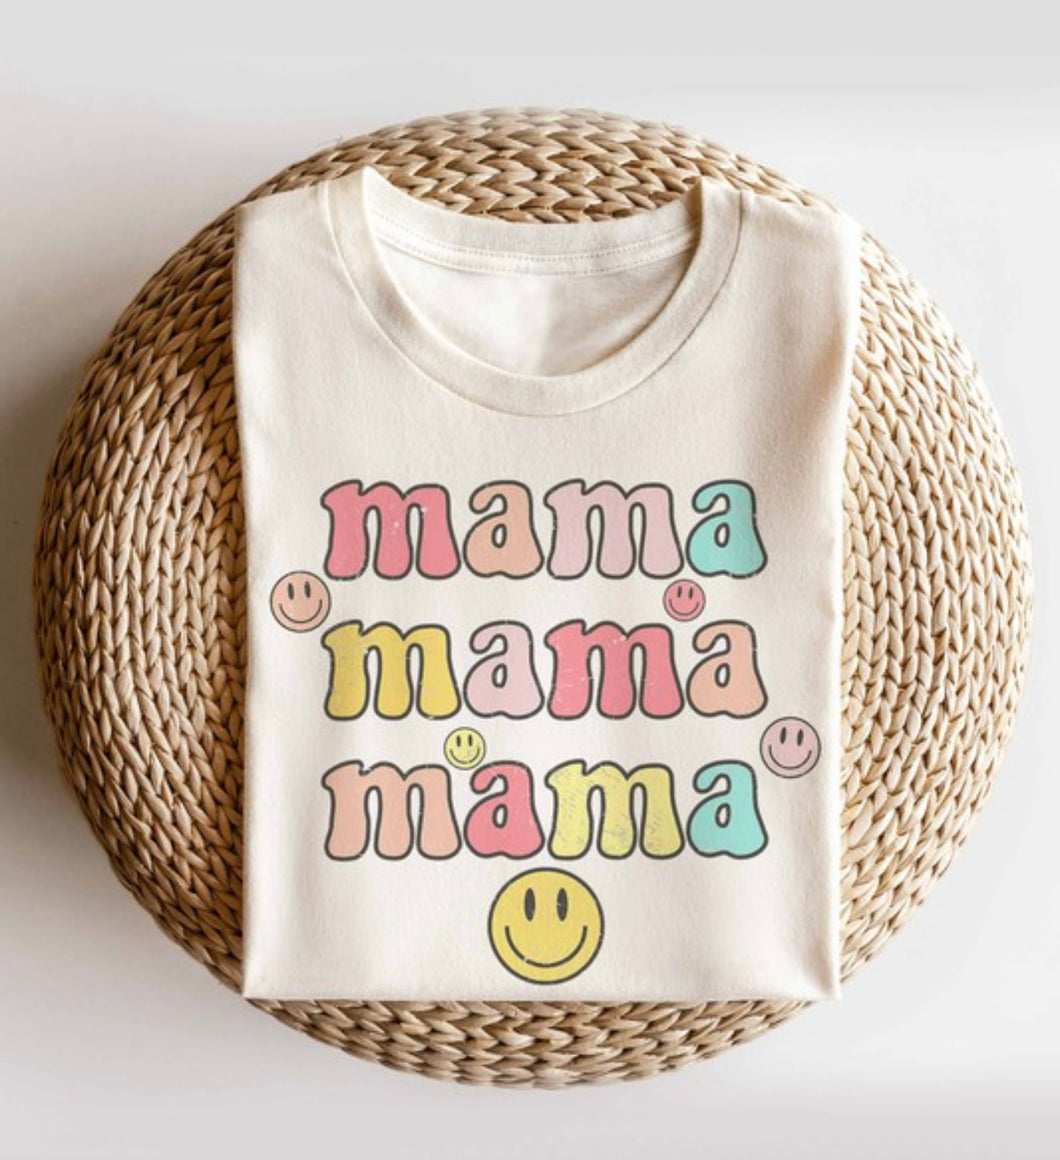 Happy Mama T-Shirt